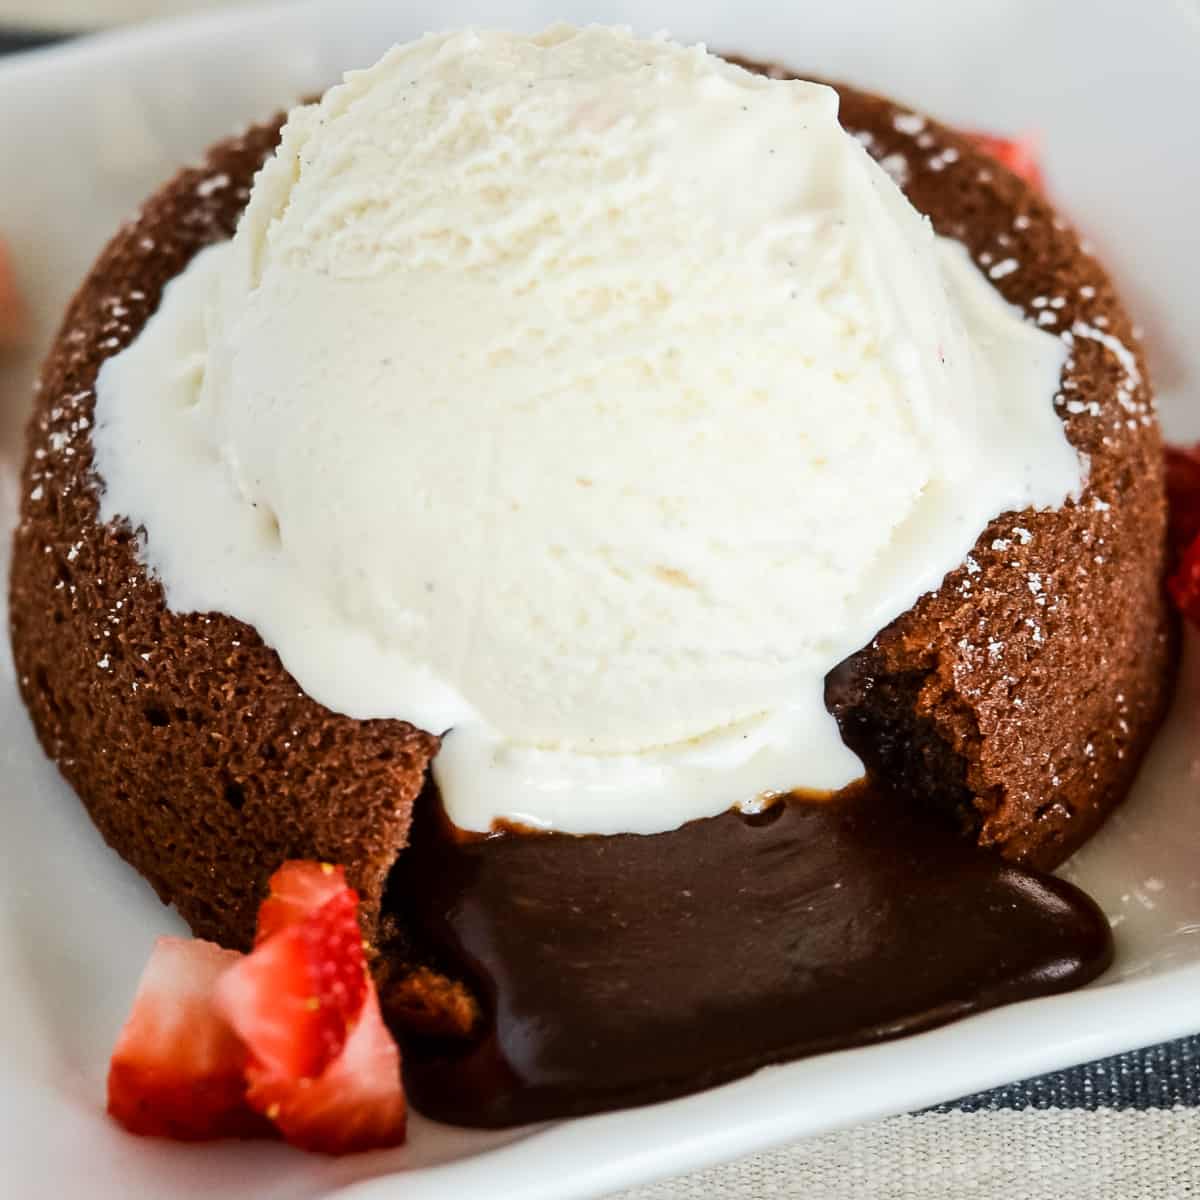 Warm chocolate lava cake topped with vanilla ice cream and strawberries